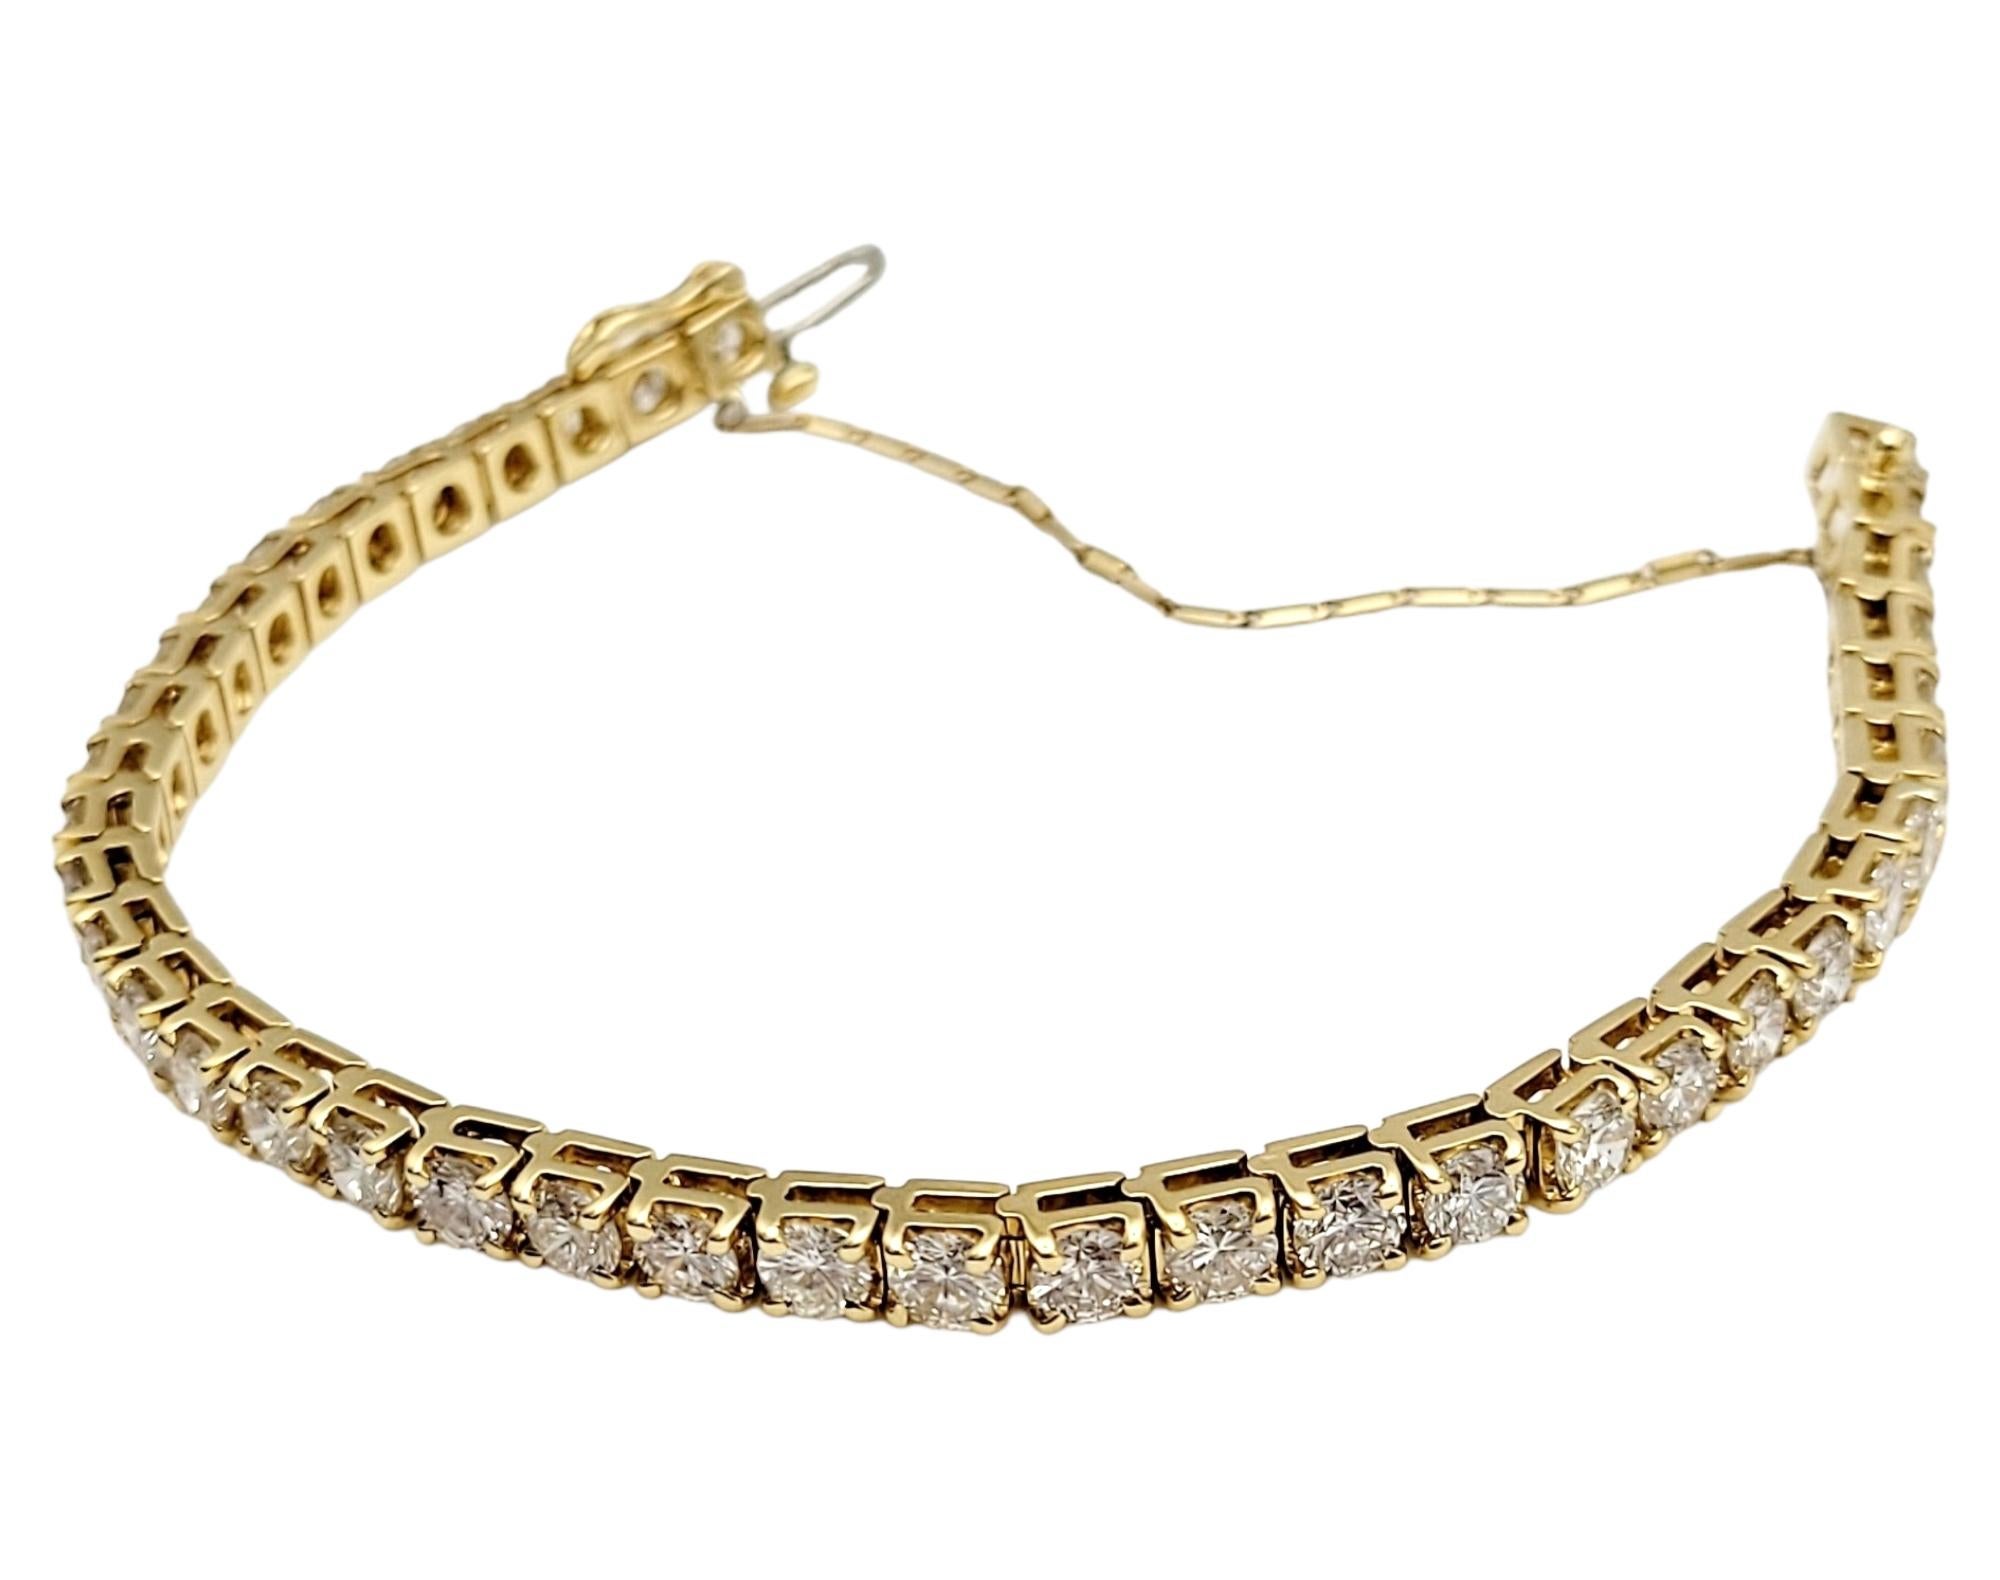 10 Carat Round Brilliant Cut Diamond Tennis Bracelet in 18 Karat Yellow Gold  For Sale 2